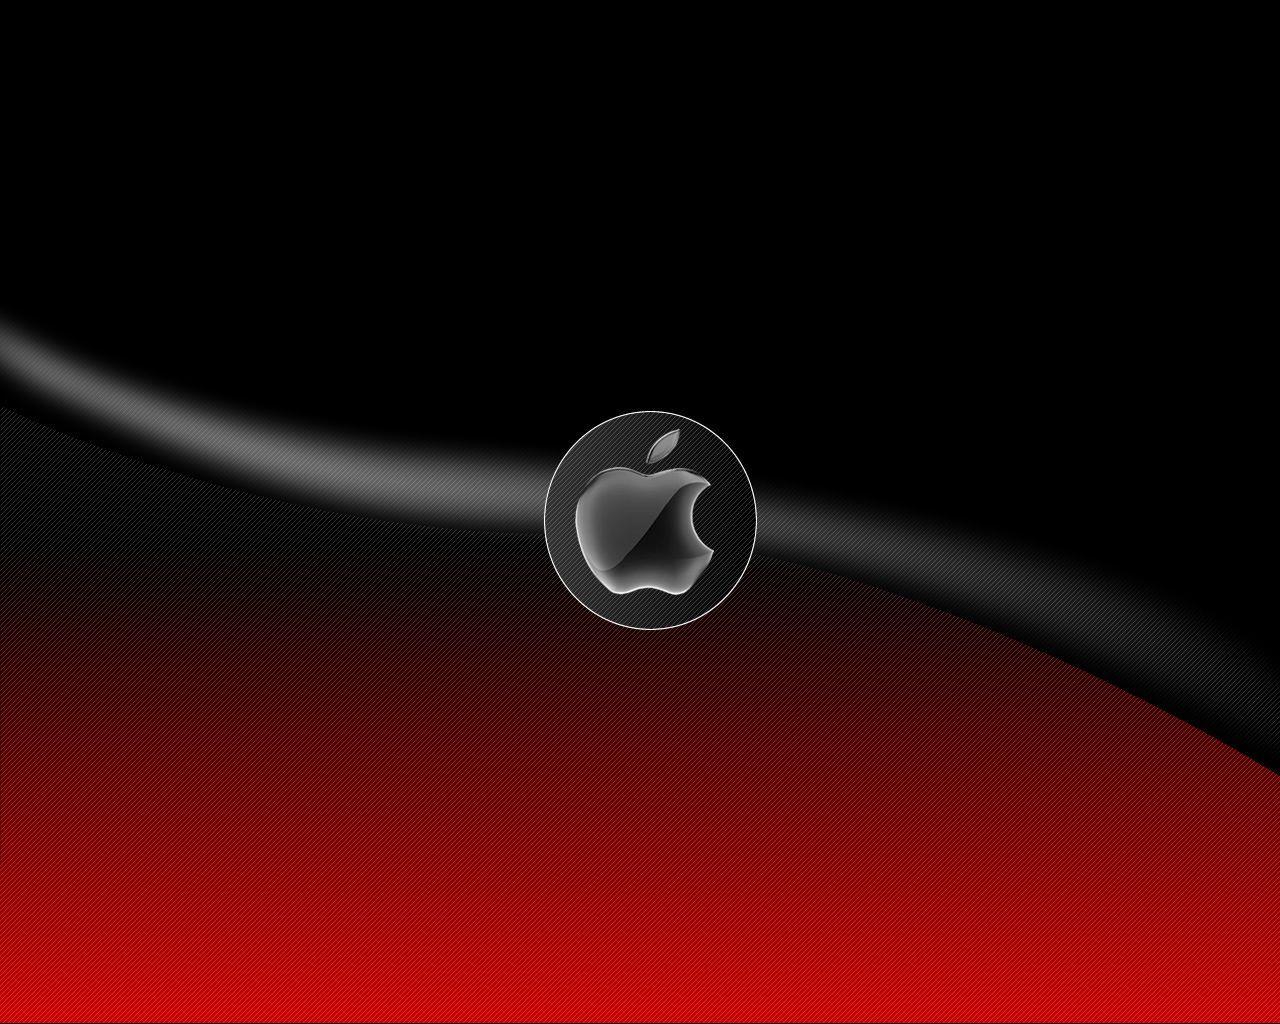 Wallpaper For > Red Apple Logo Wallpaper iPhone 4